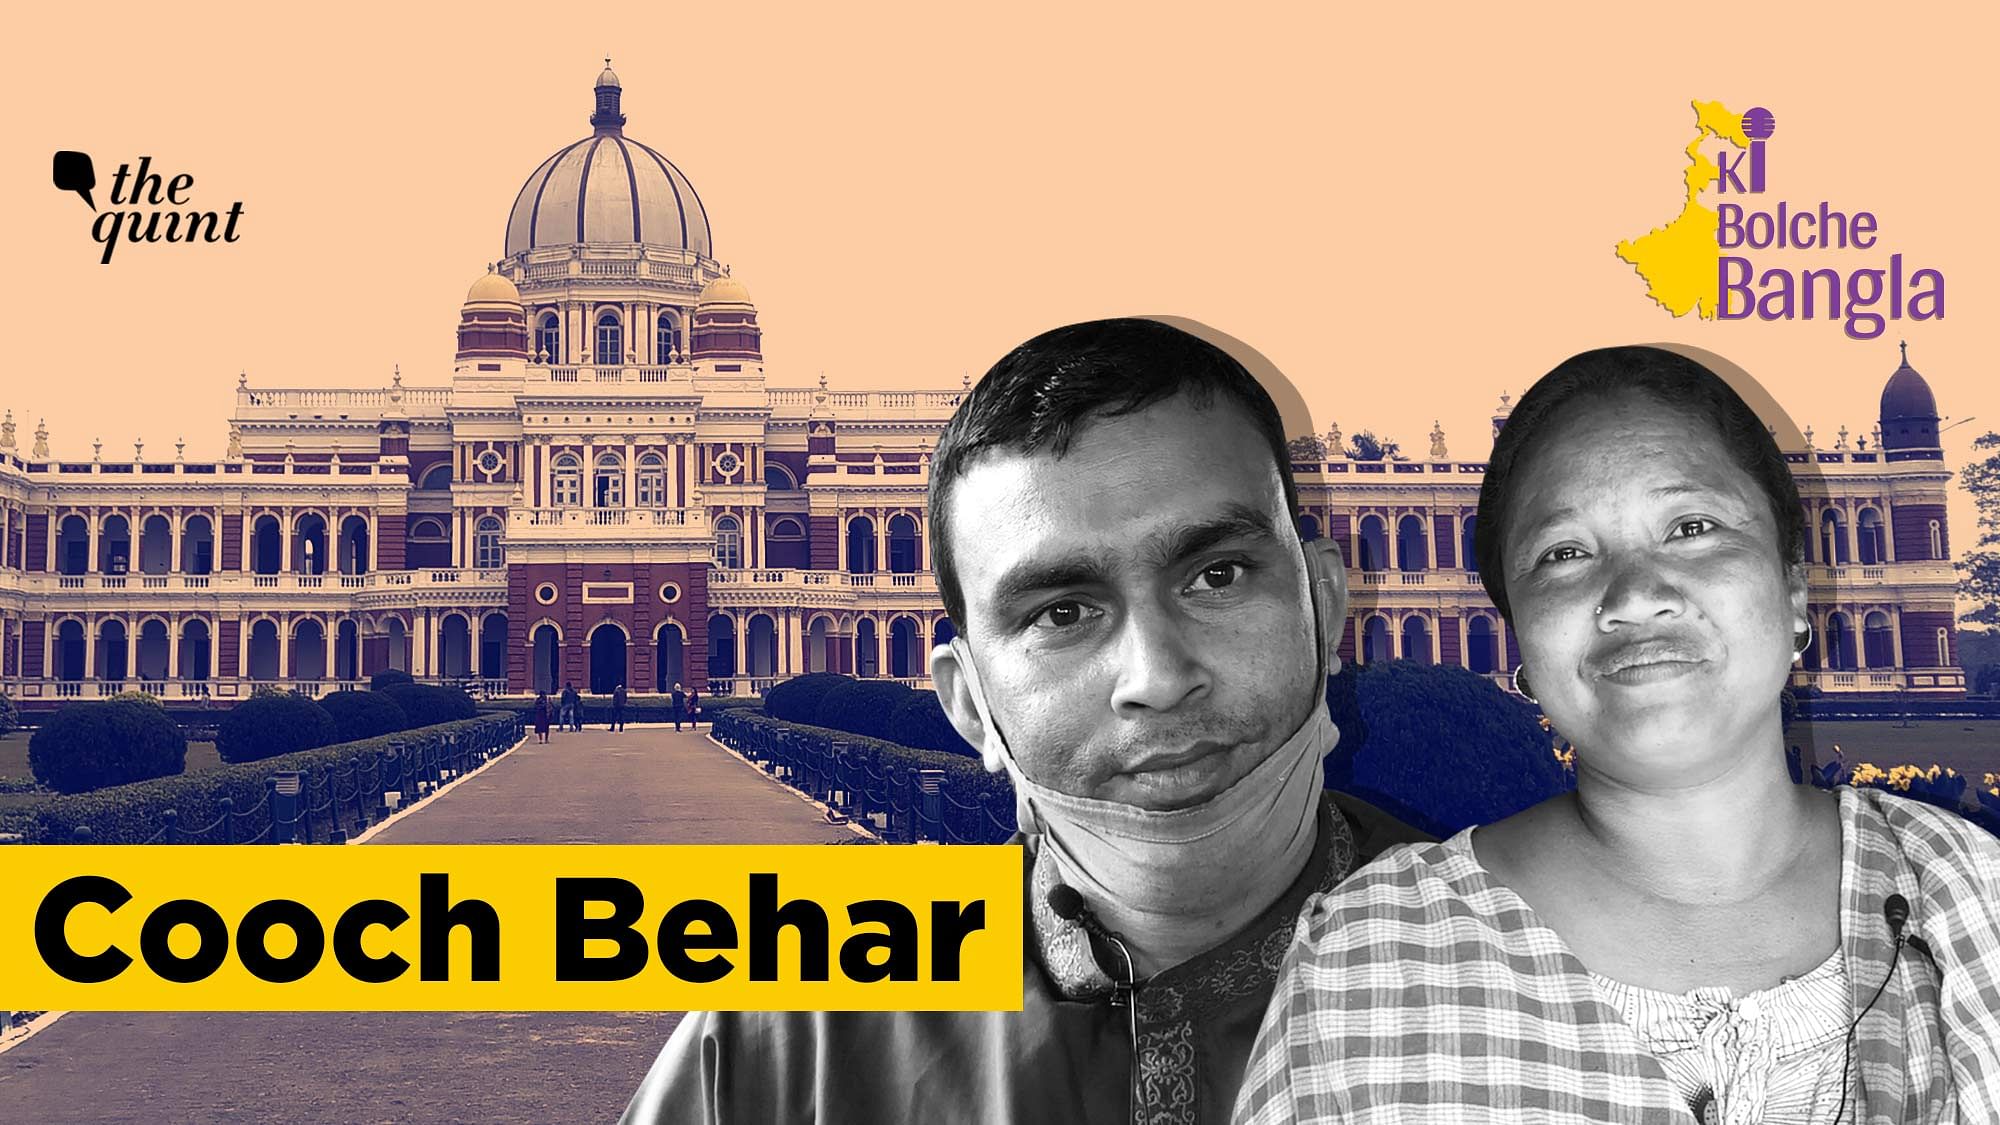 Ki Bolche Bangla: Coochbehar, Citizens Divided On Communal Lines